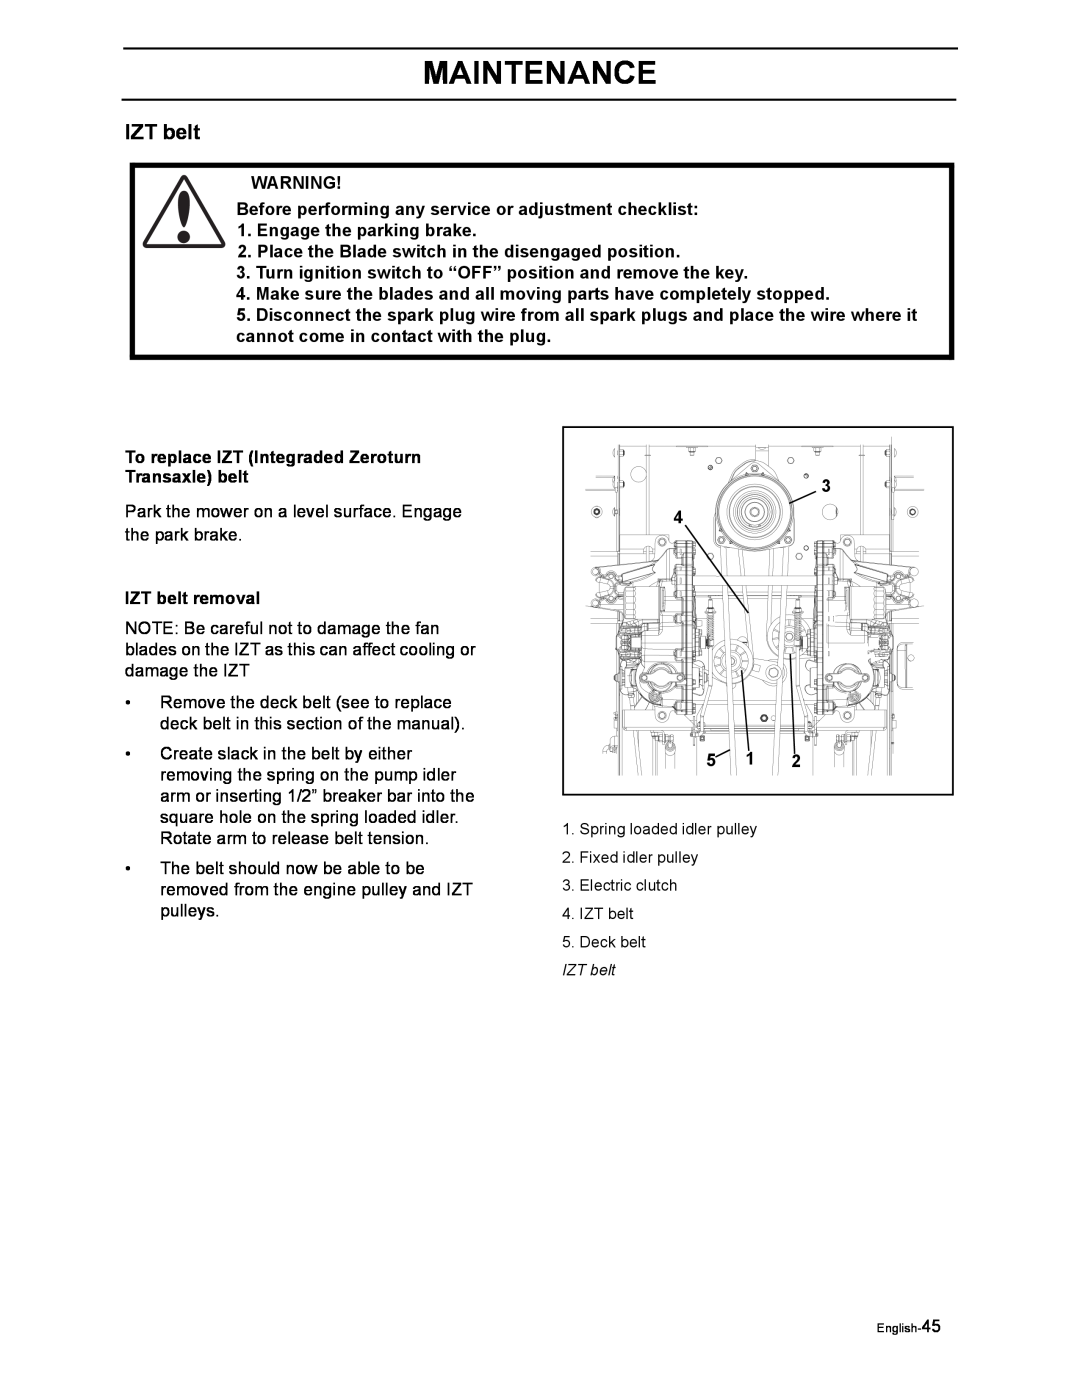 Yazoo/Kees ZEKW48190 manual IZT belt, Before performing any service or adjustment checklist, Engage the parking brake 